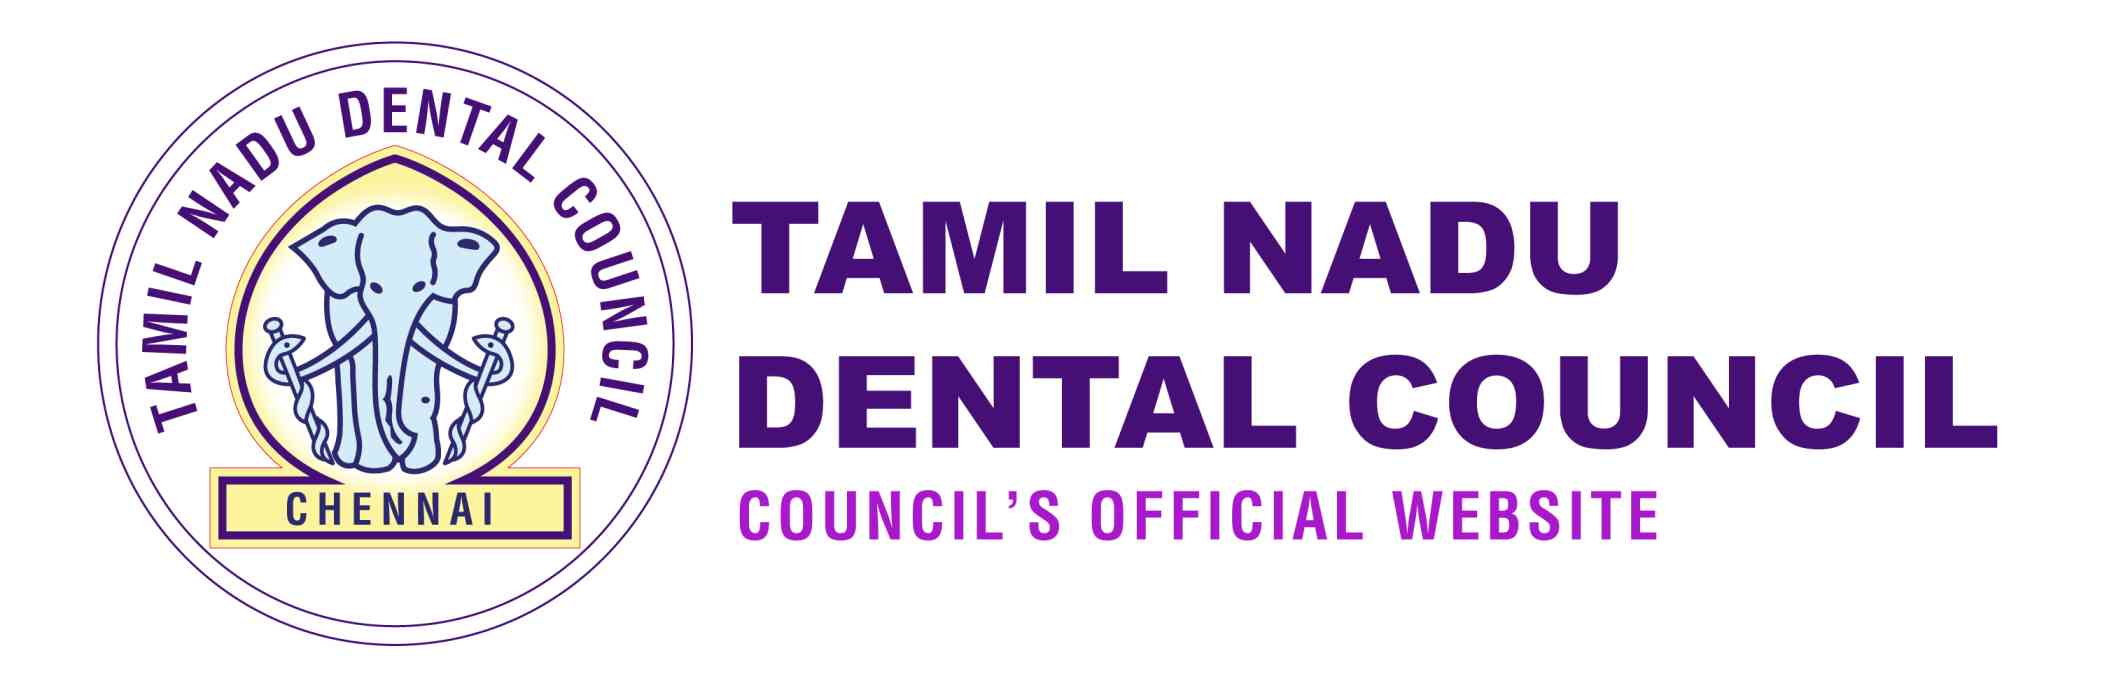 Tamil Nadu Dental Council